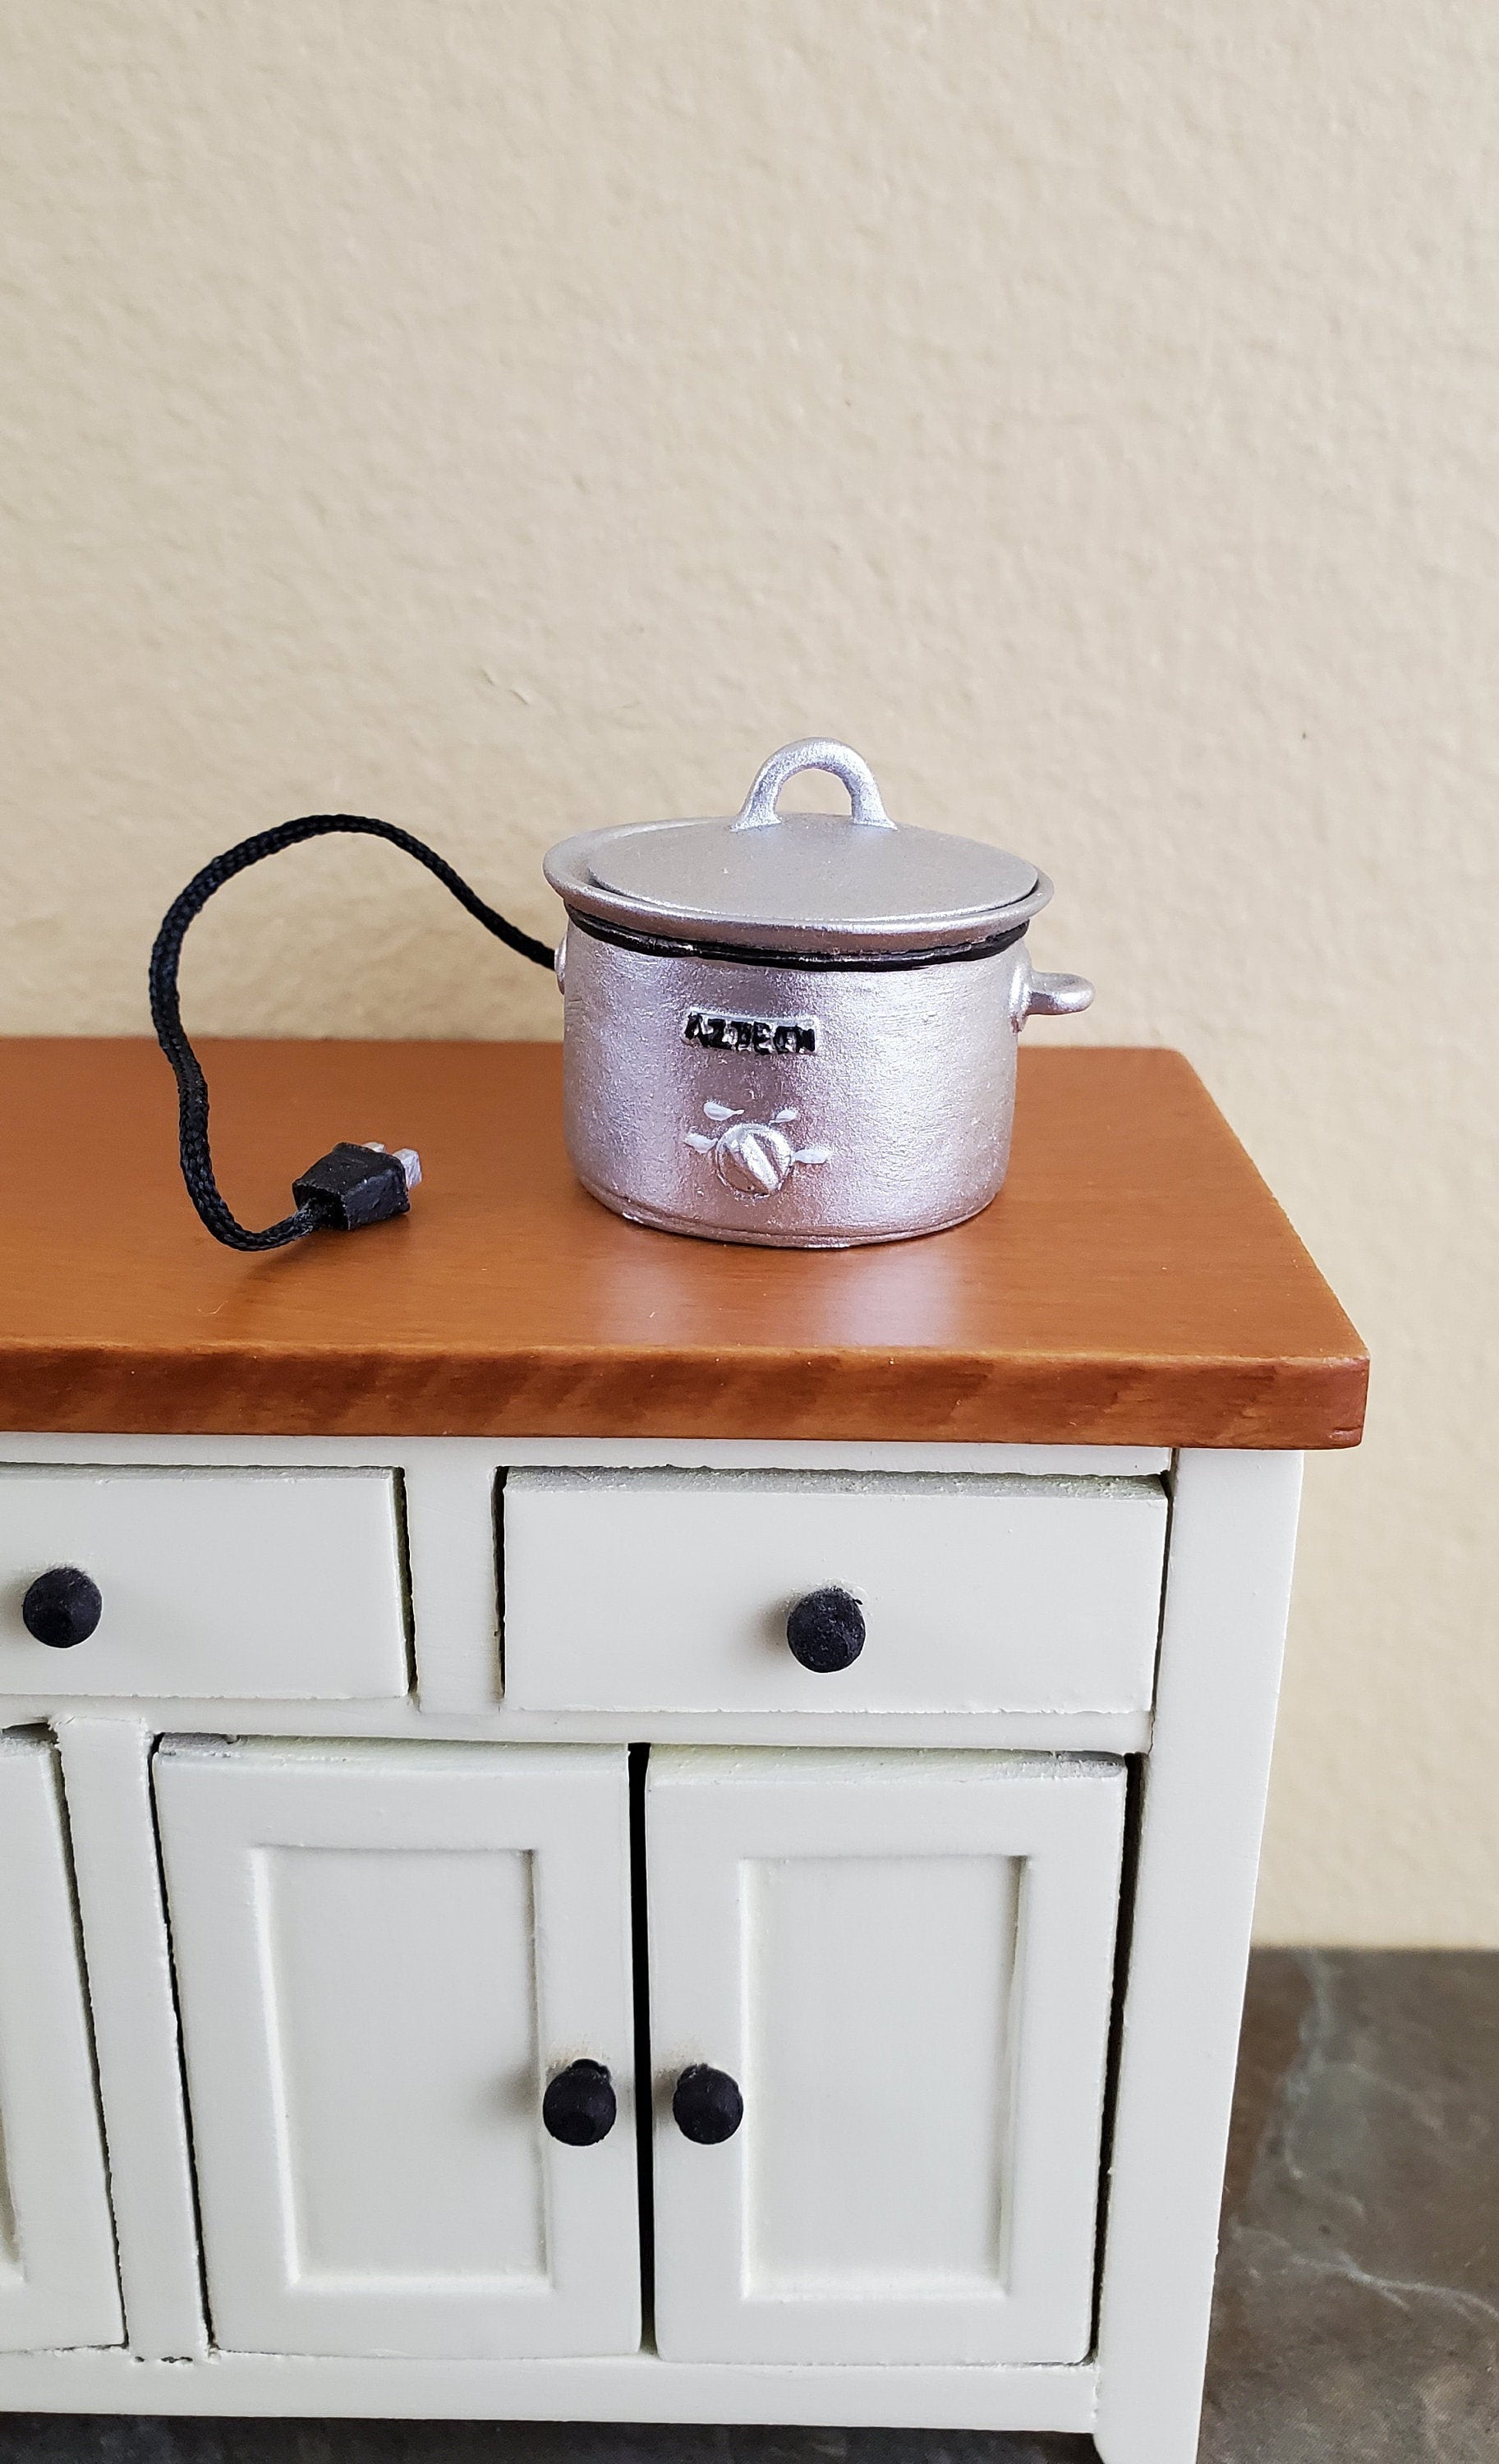 Mini Slow Cooker Crockpot Gift Set - Silver